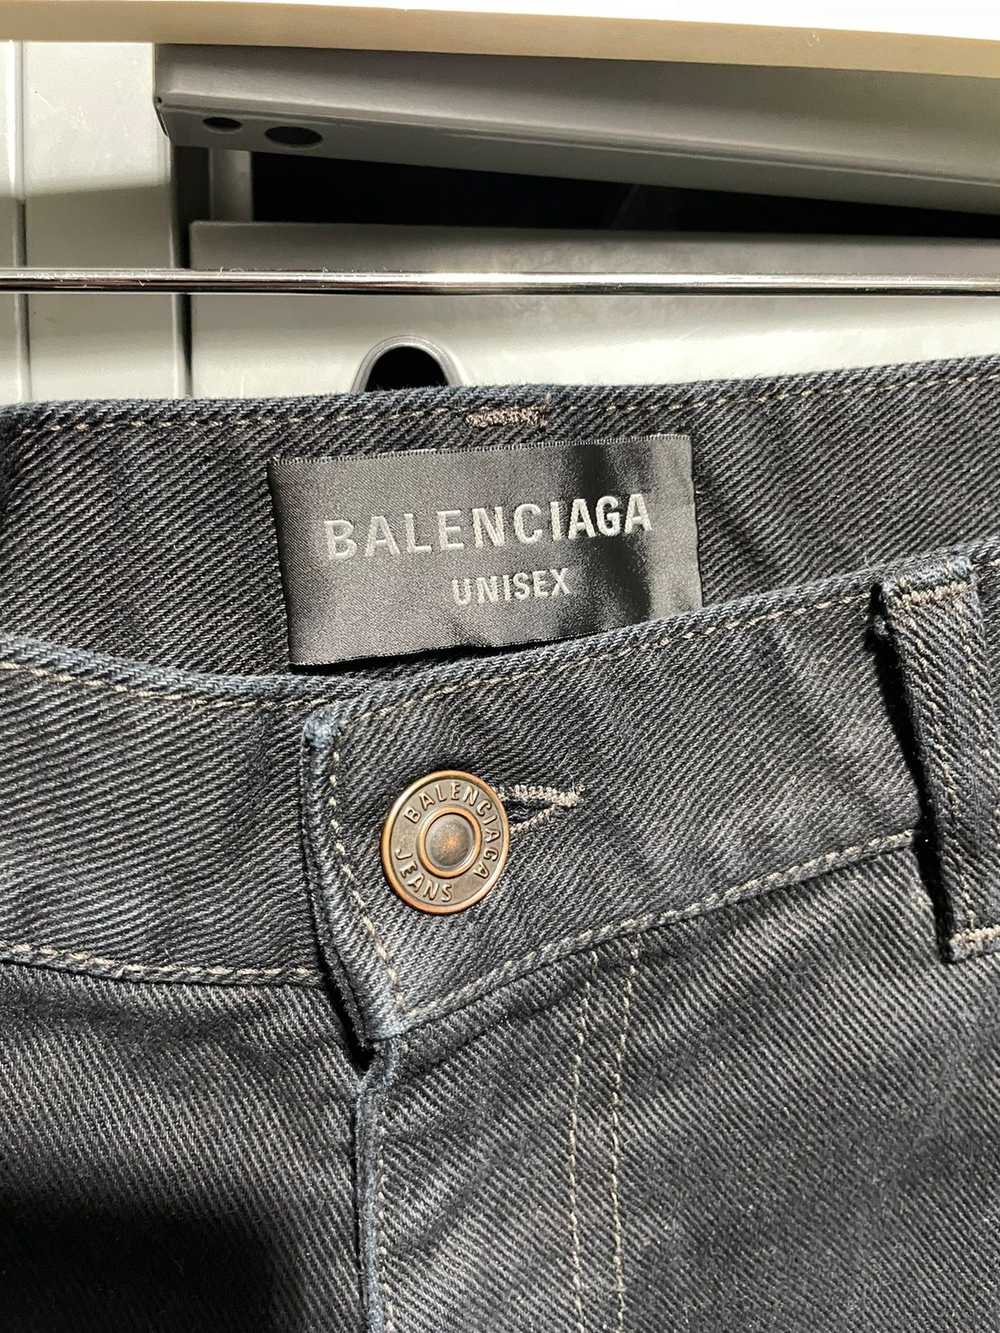 Balenciaga Balenciaga black jeans distressed faded - image 4